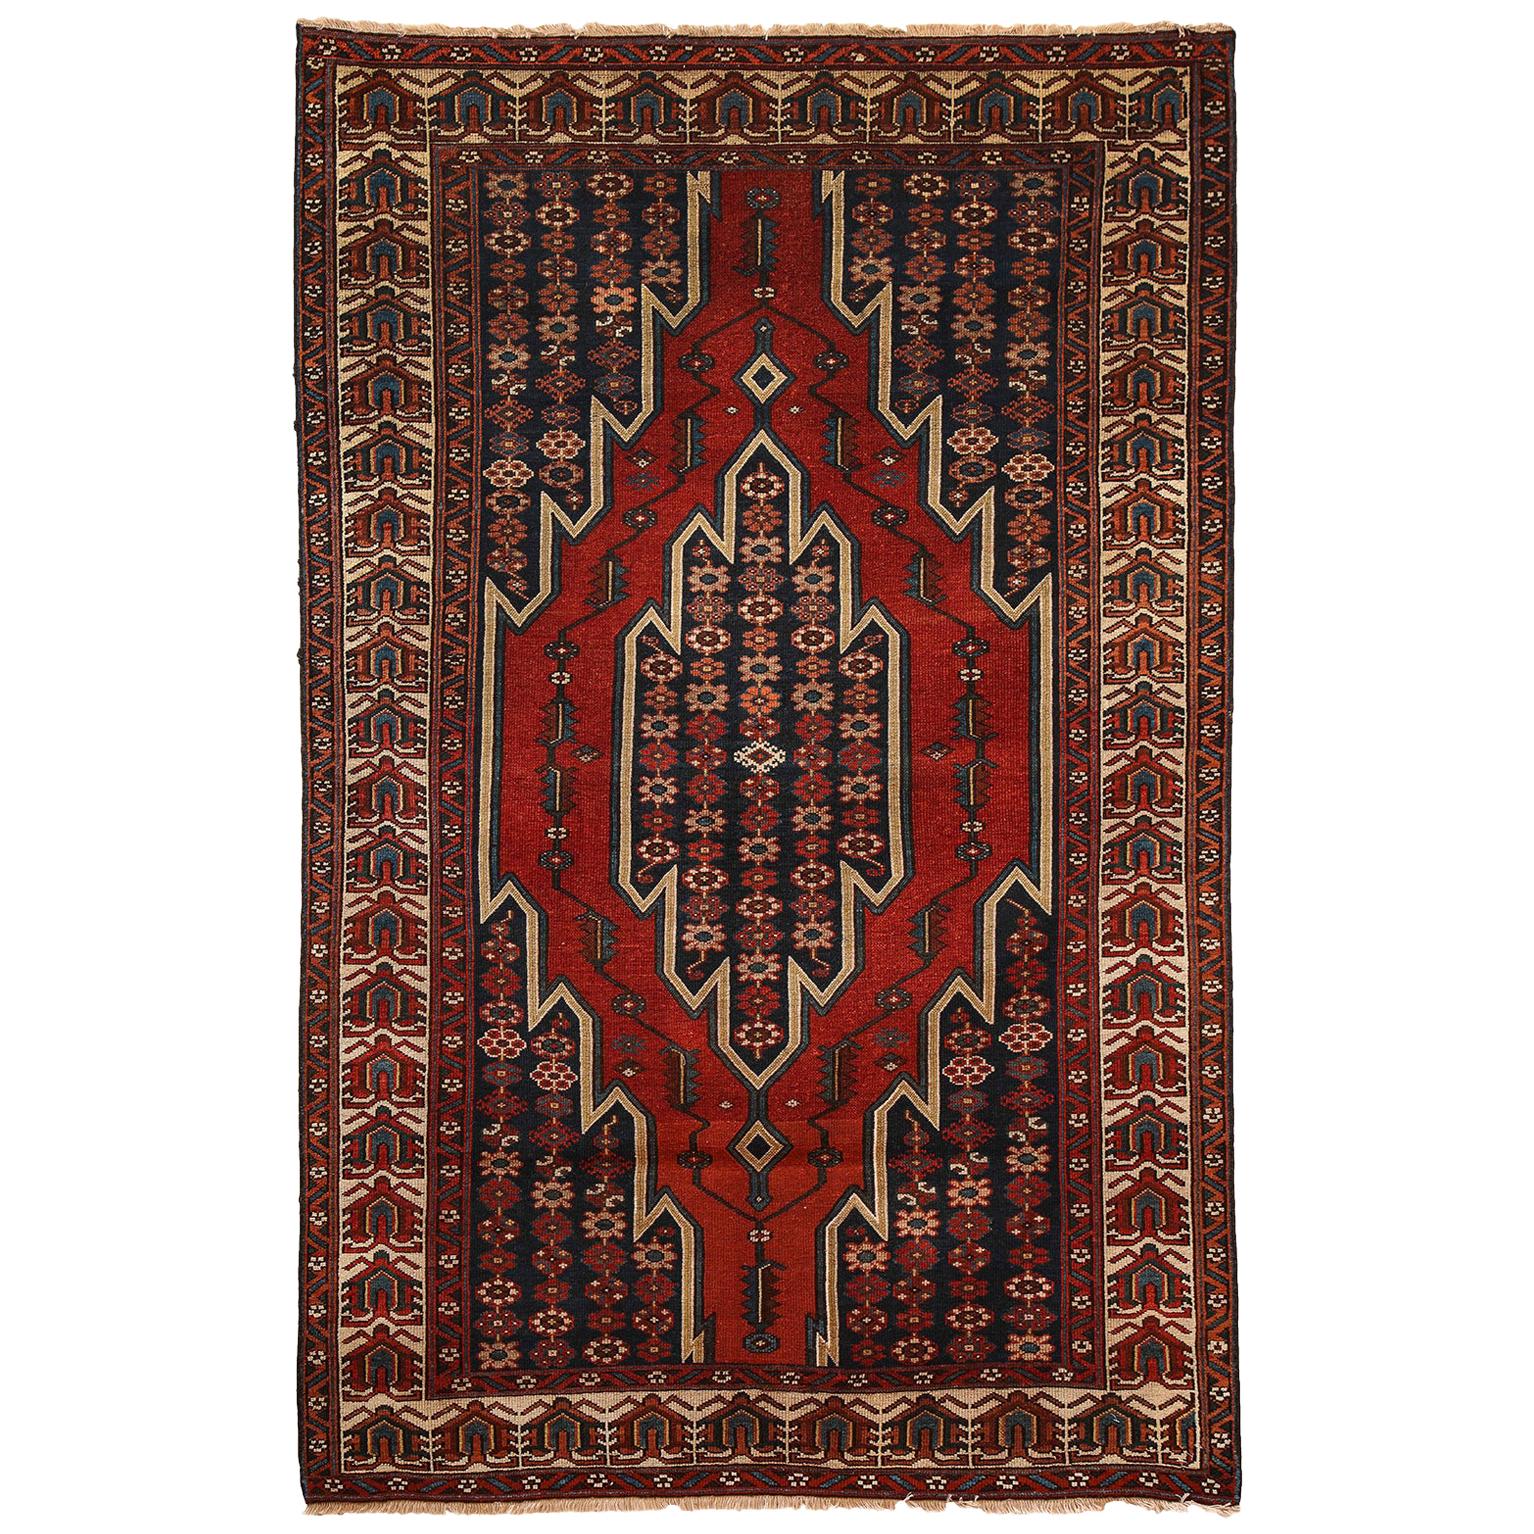 Antique 1920s Wool Persian Mazlaghan Rug, 4' x 6'